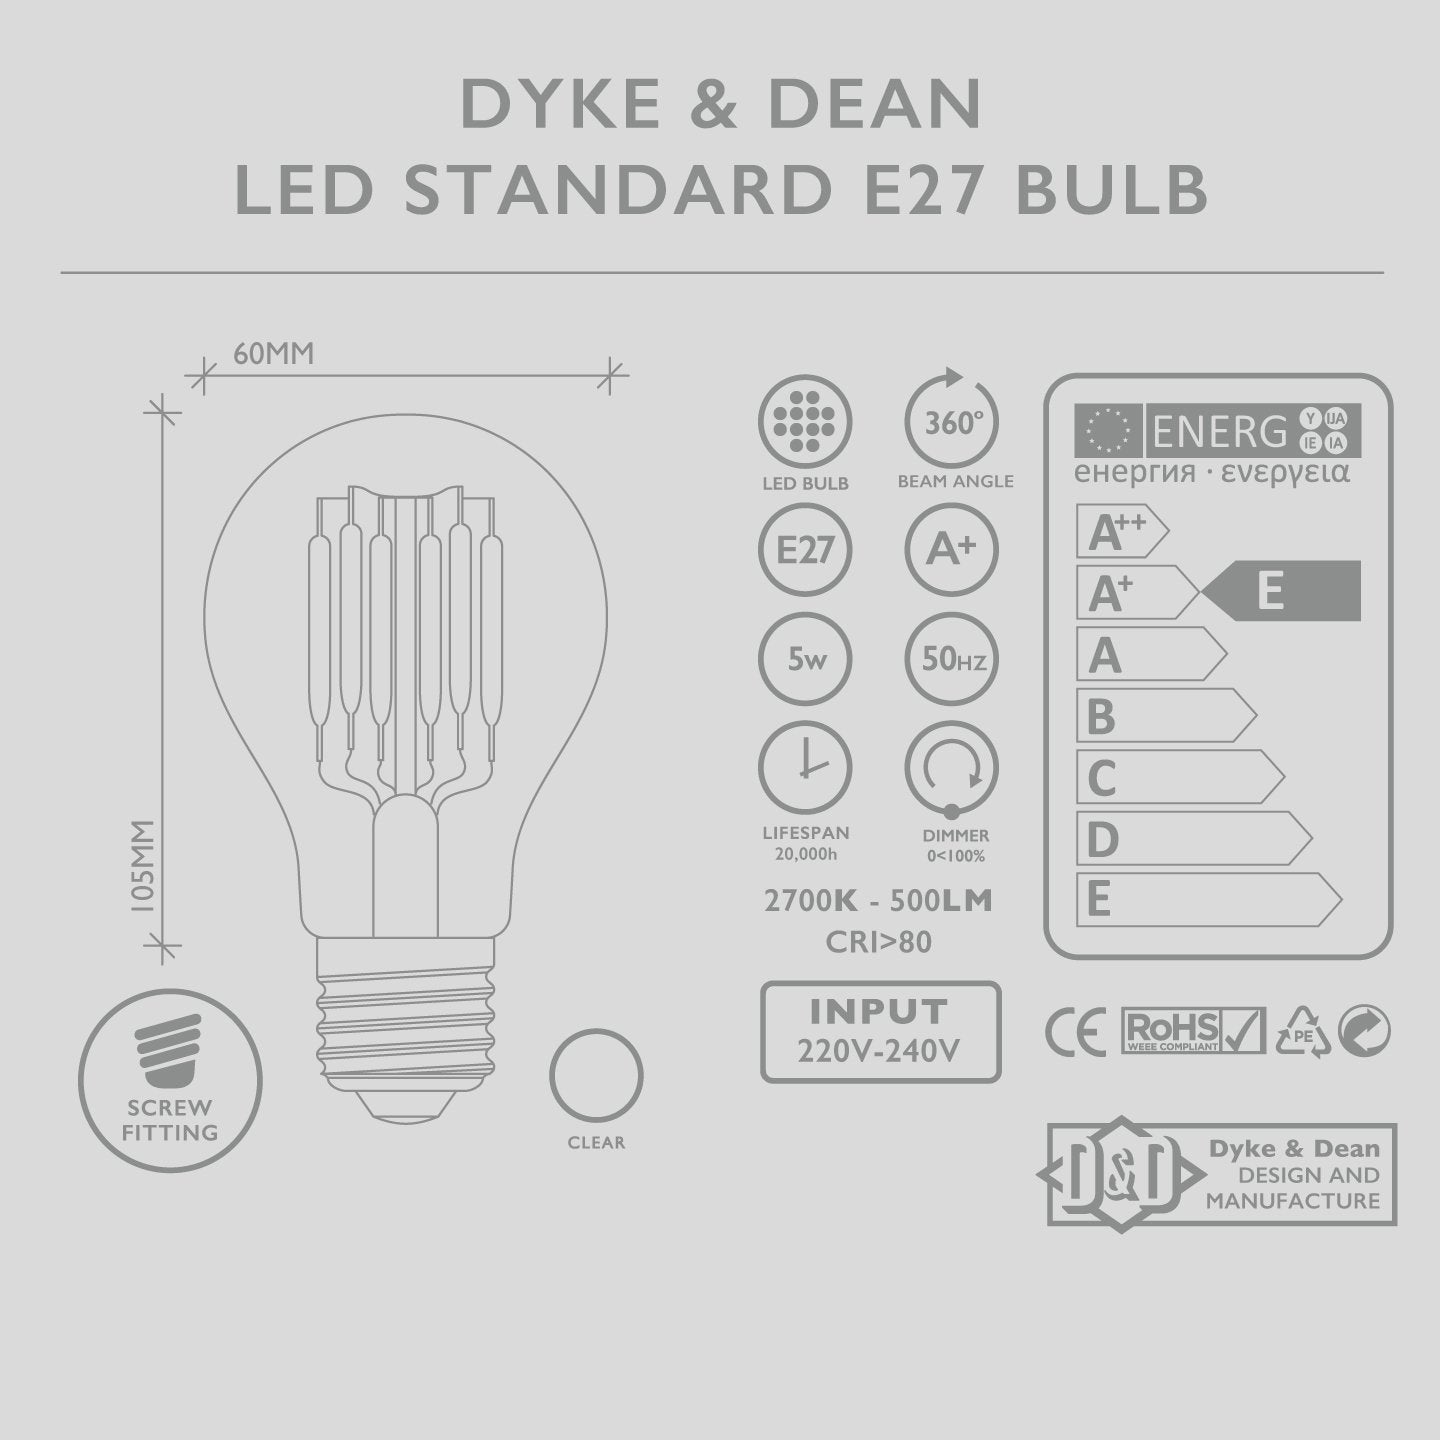 DYKE & DEAN LED STANDARD E27 BULB - DYKE & DEAN